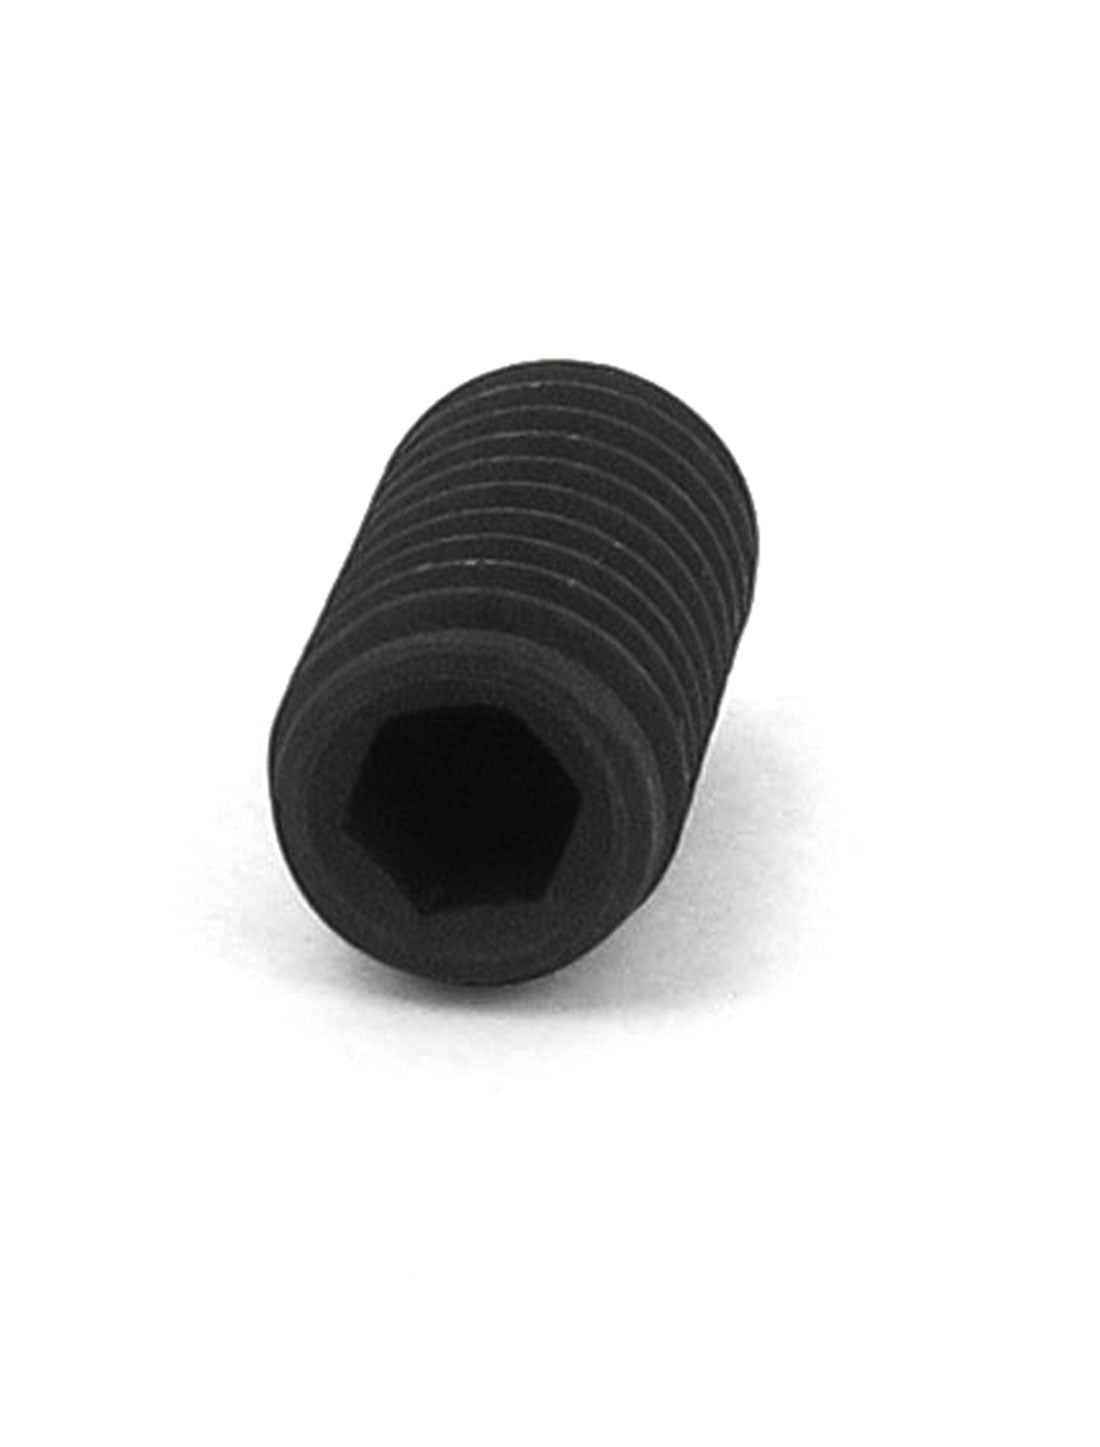 Uxcell Uxcell M8 x 10mm 1.25mm Pitch Hex Socket Set Cup Point Grub Screws Black 50pcs